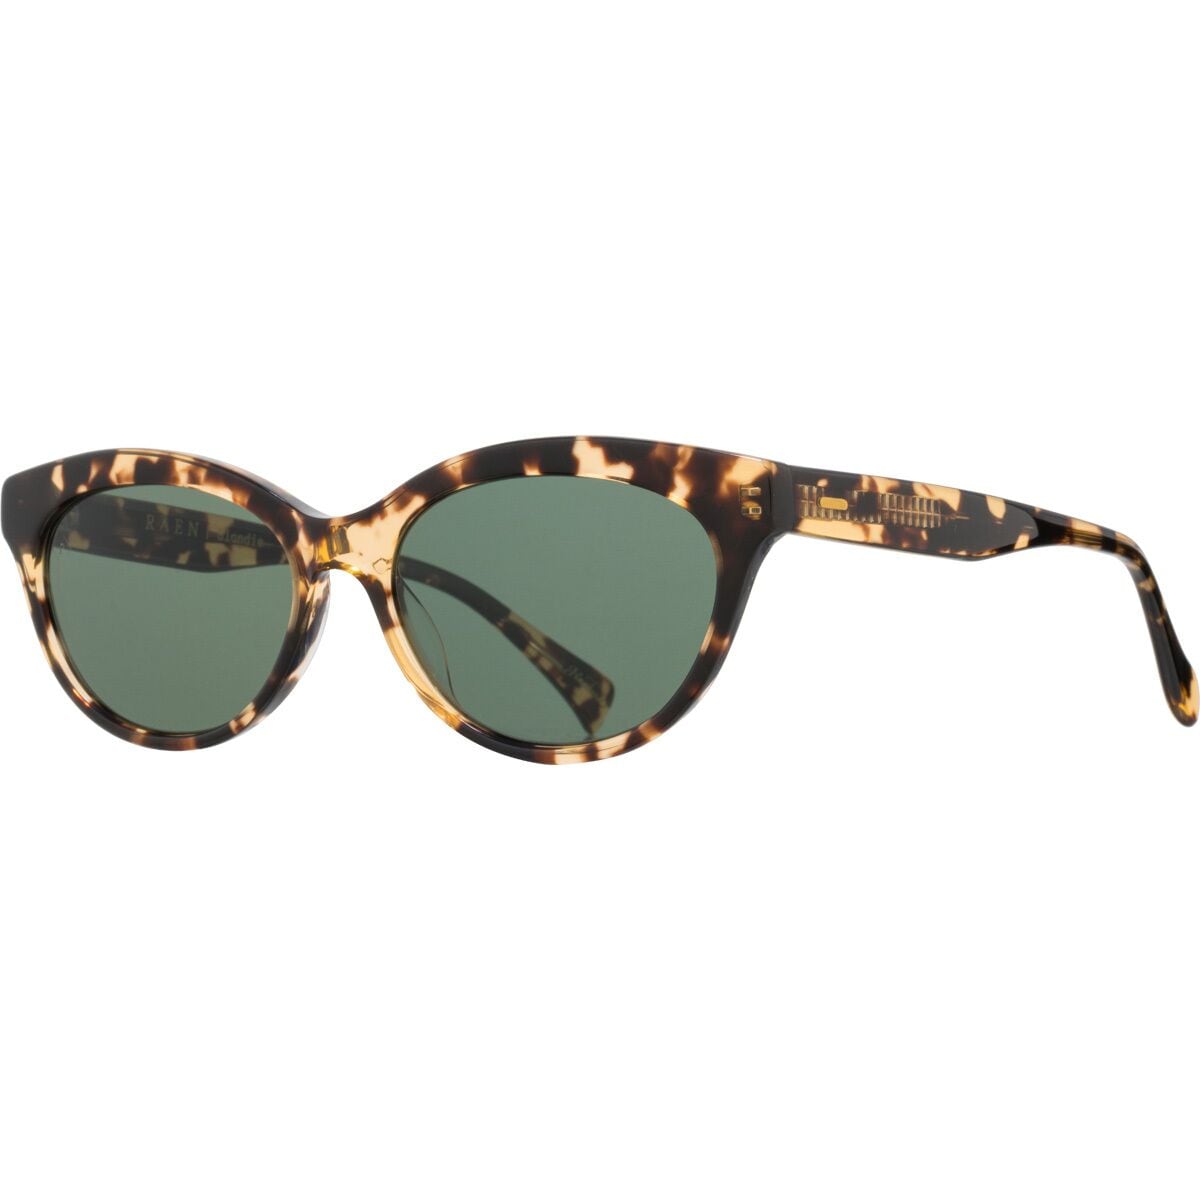 RAEN optics Blondie 54 Polarized Sunglasses